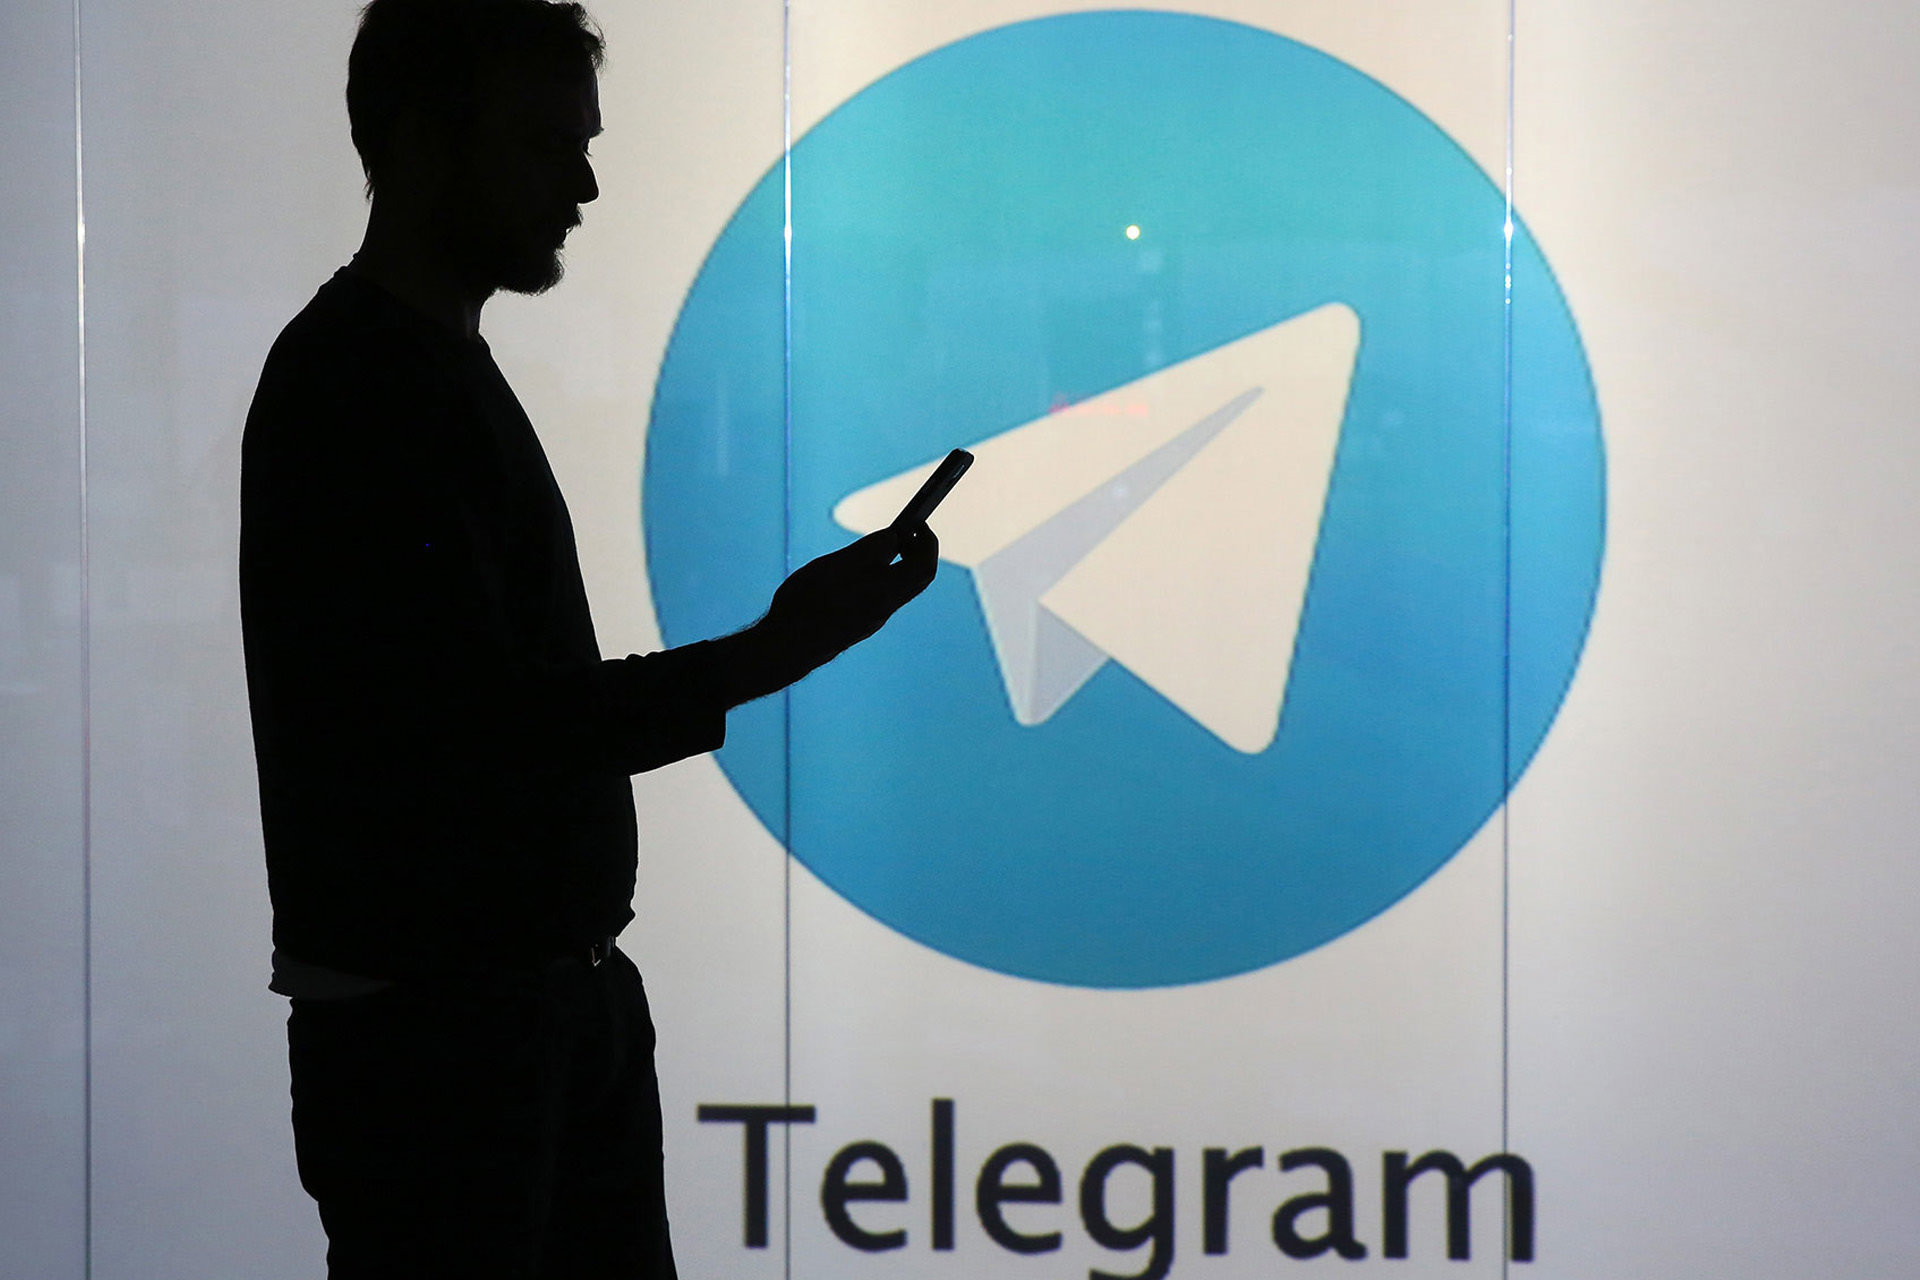 Man shadow with Telegram logo in background